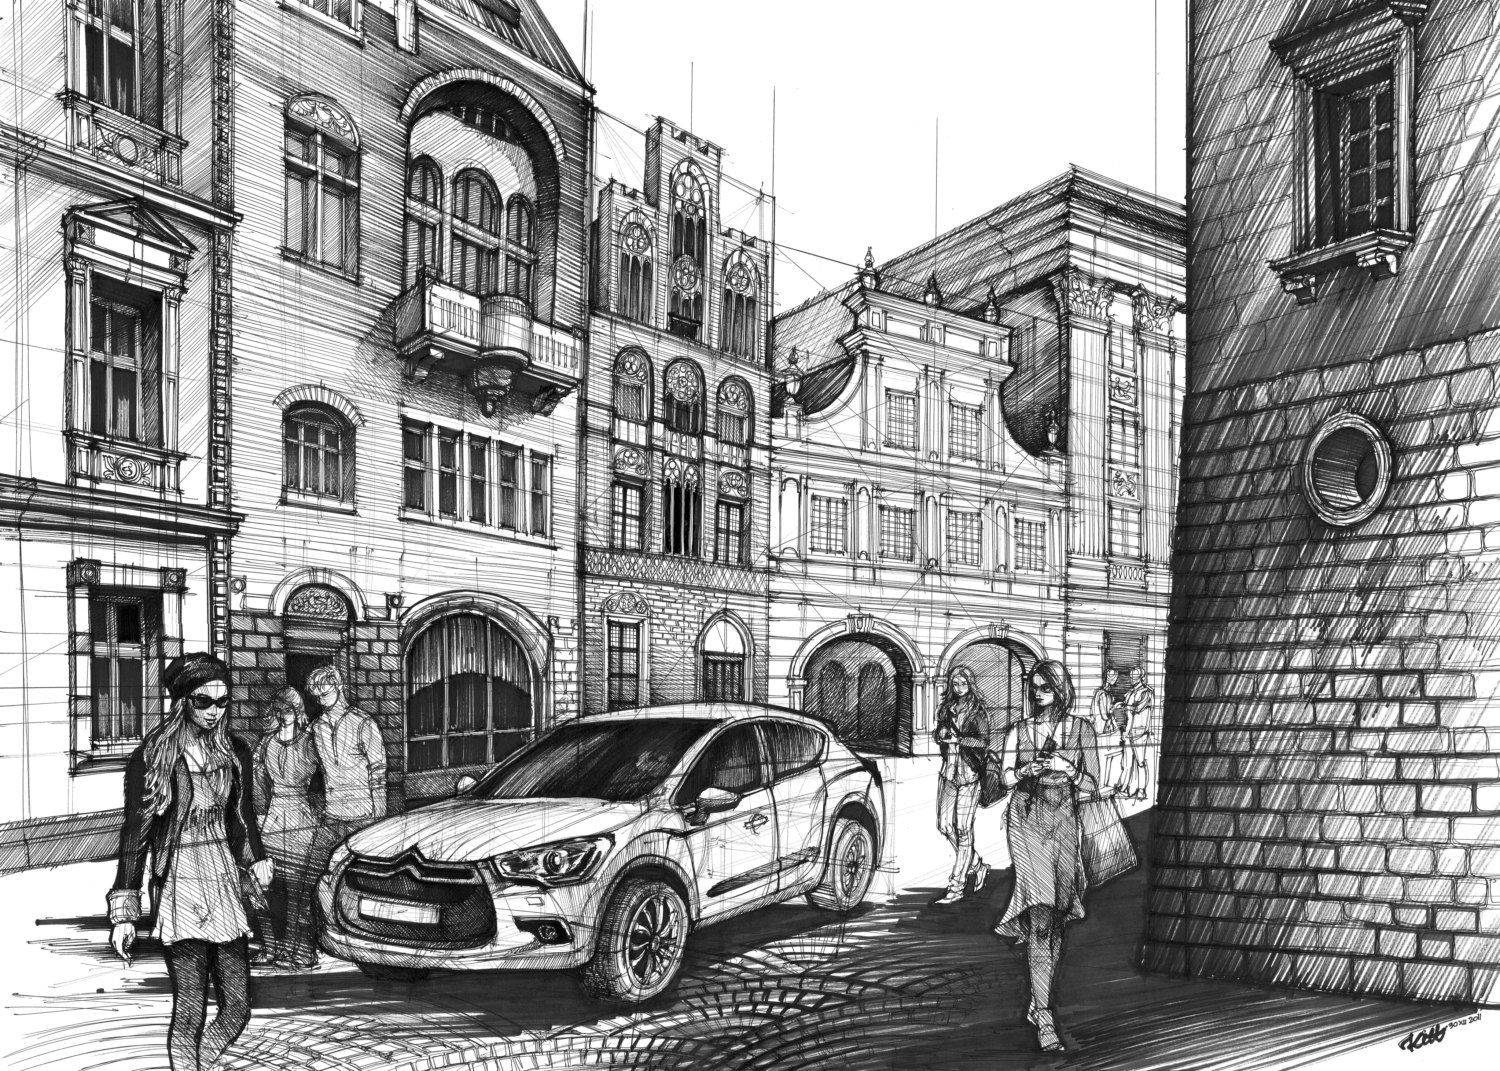 Sketch of City Street by RoboFH on DeviantArt